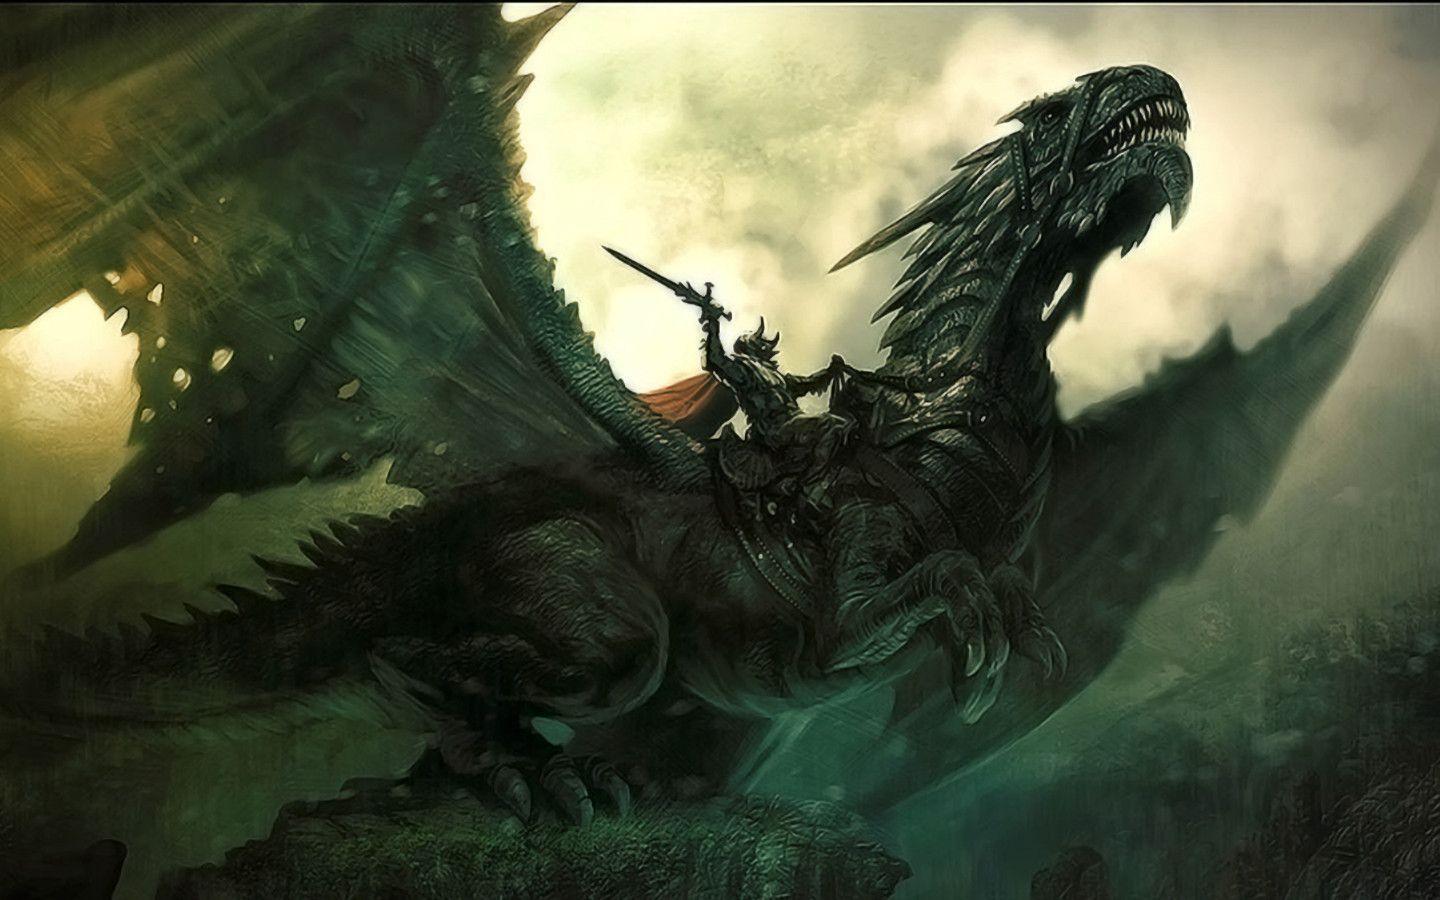 image For > Epic Dragon Fantasy Wallpaper